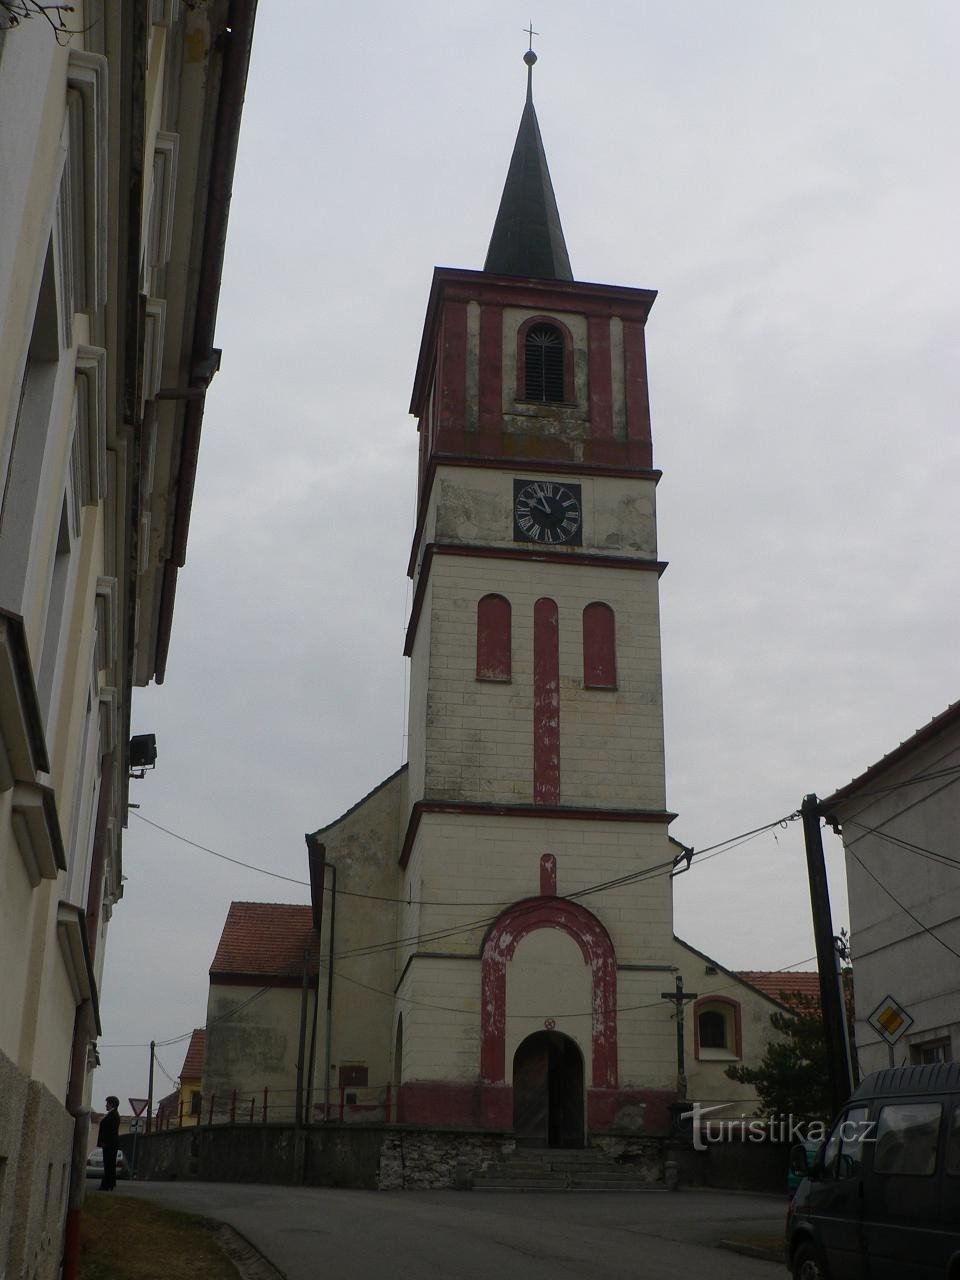 Volenice, torre da igreja de St. Pedro e Paulo